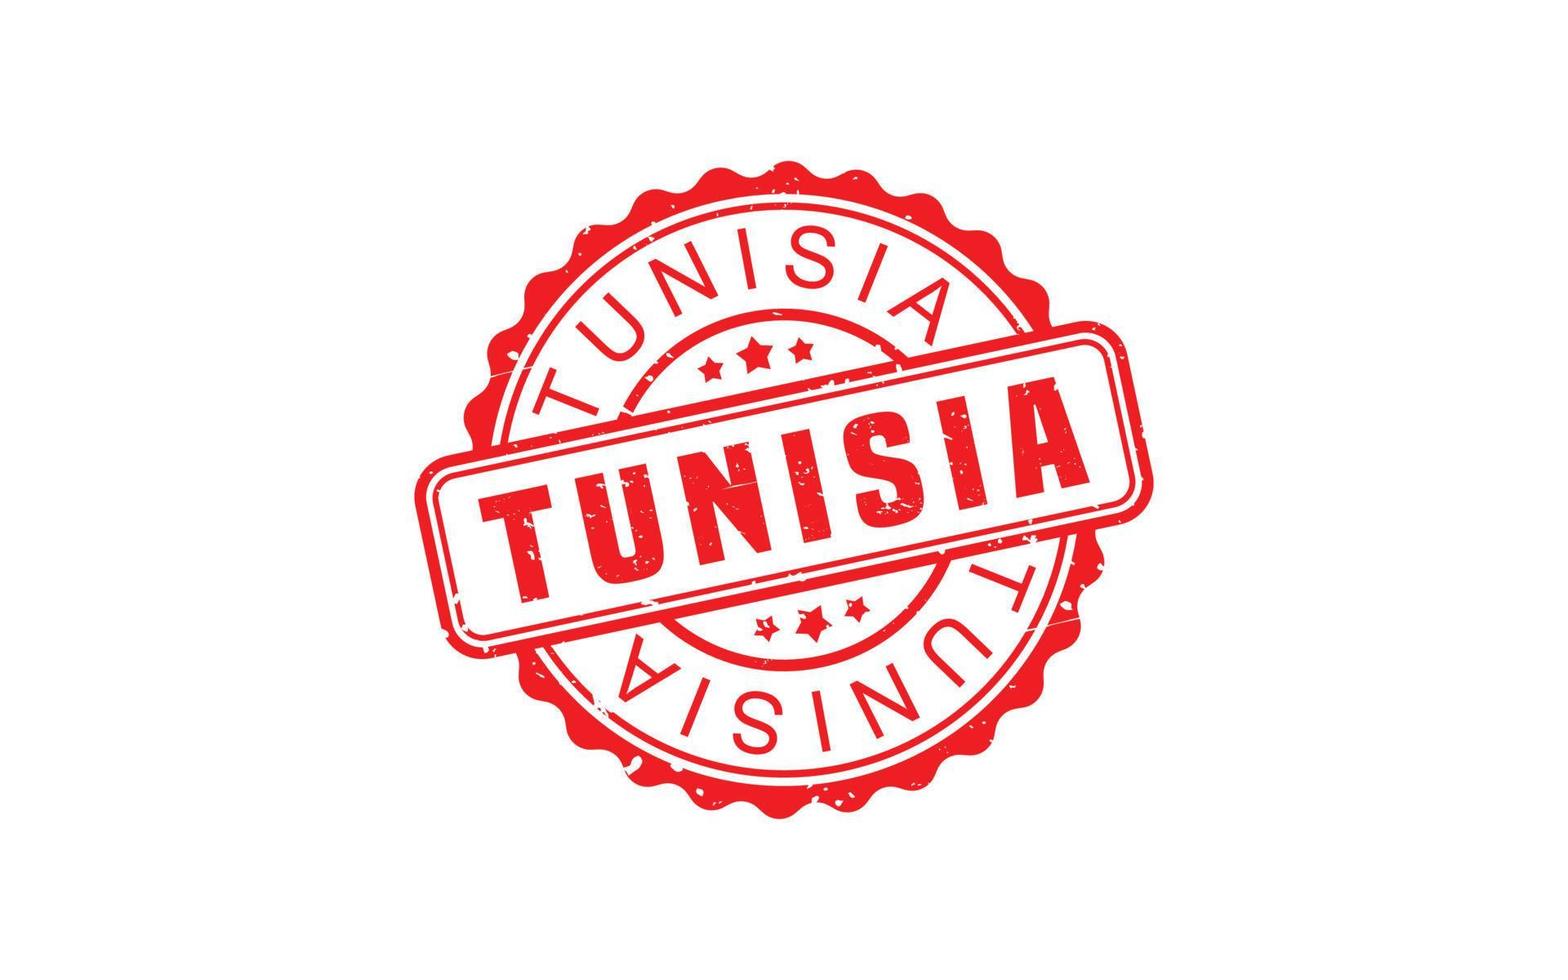 Tunísia carimbo borracha com grunge estilo em branco fundo vetor